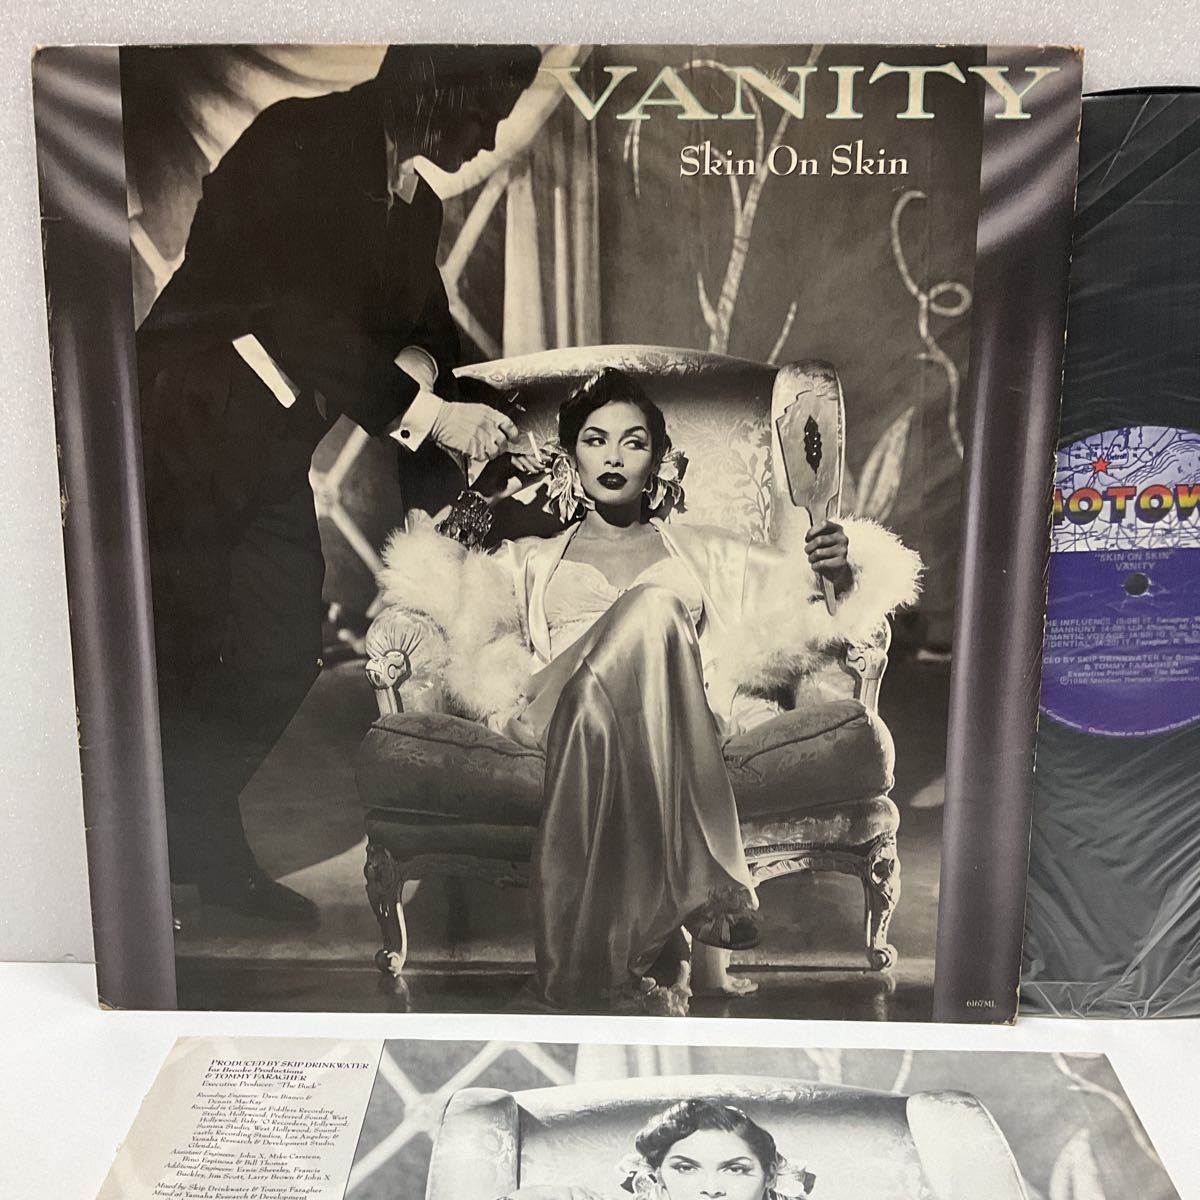 VANITY / SKIN ON SKIN / LP レコード / US / 1986 / MOTOWN / SOUL / BOOGIE /_画像1